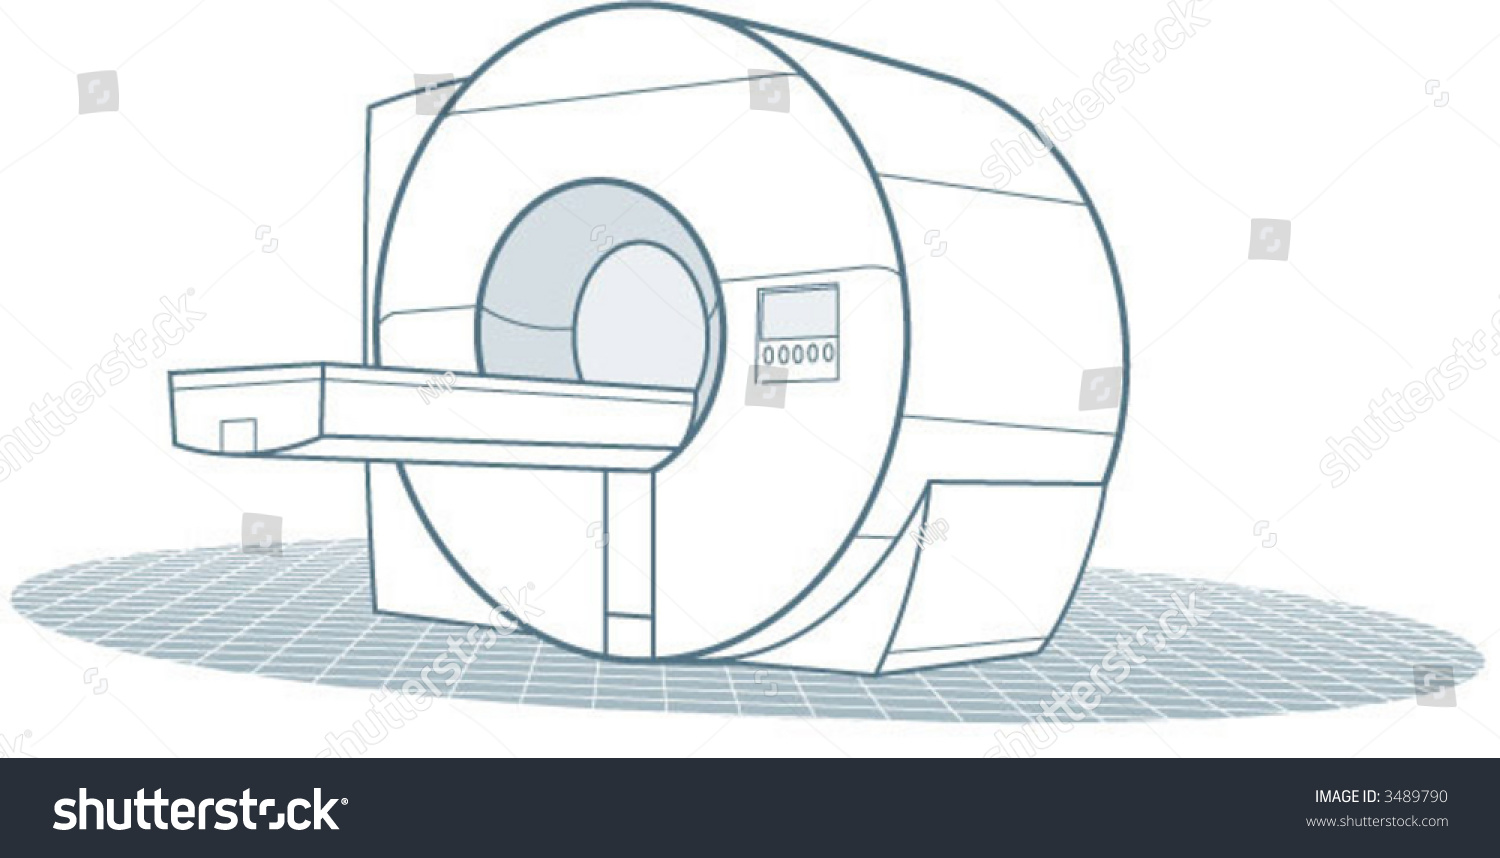 SVG of An MRI machine svg